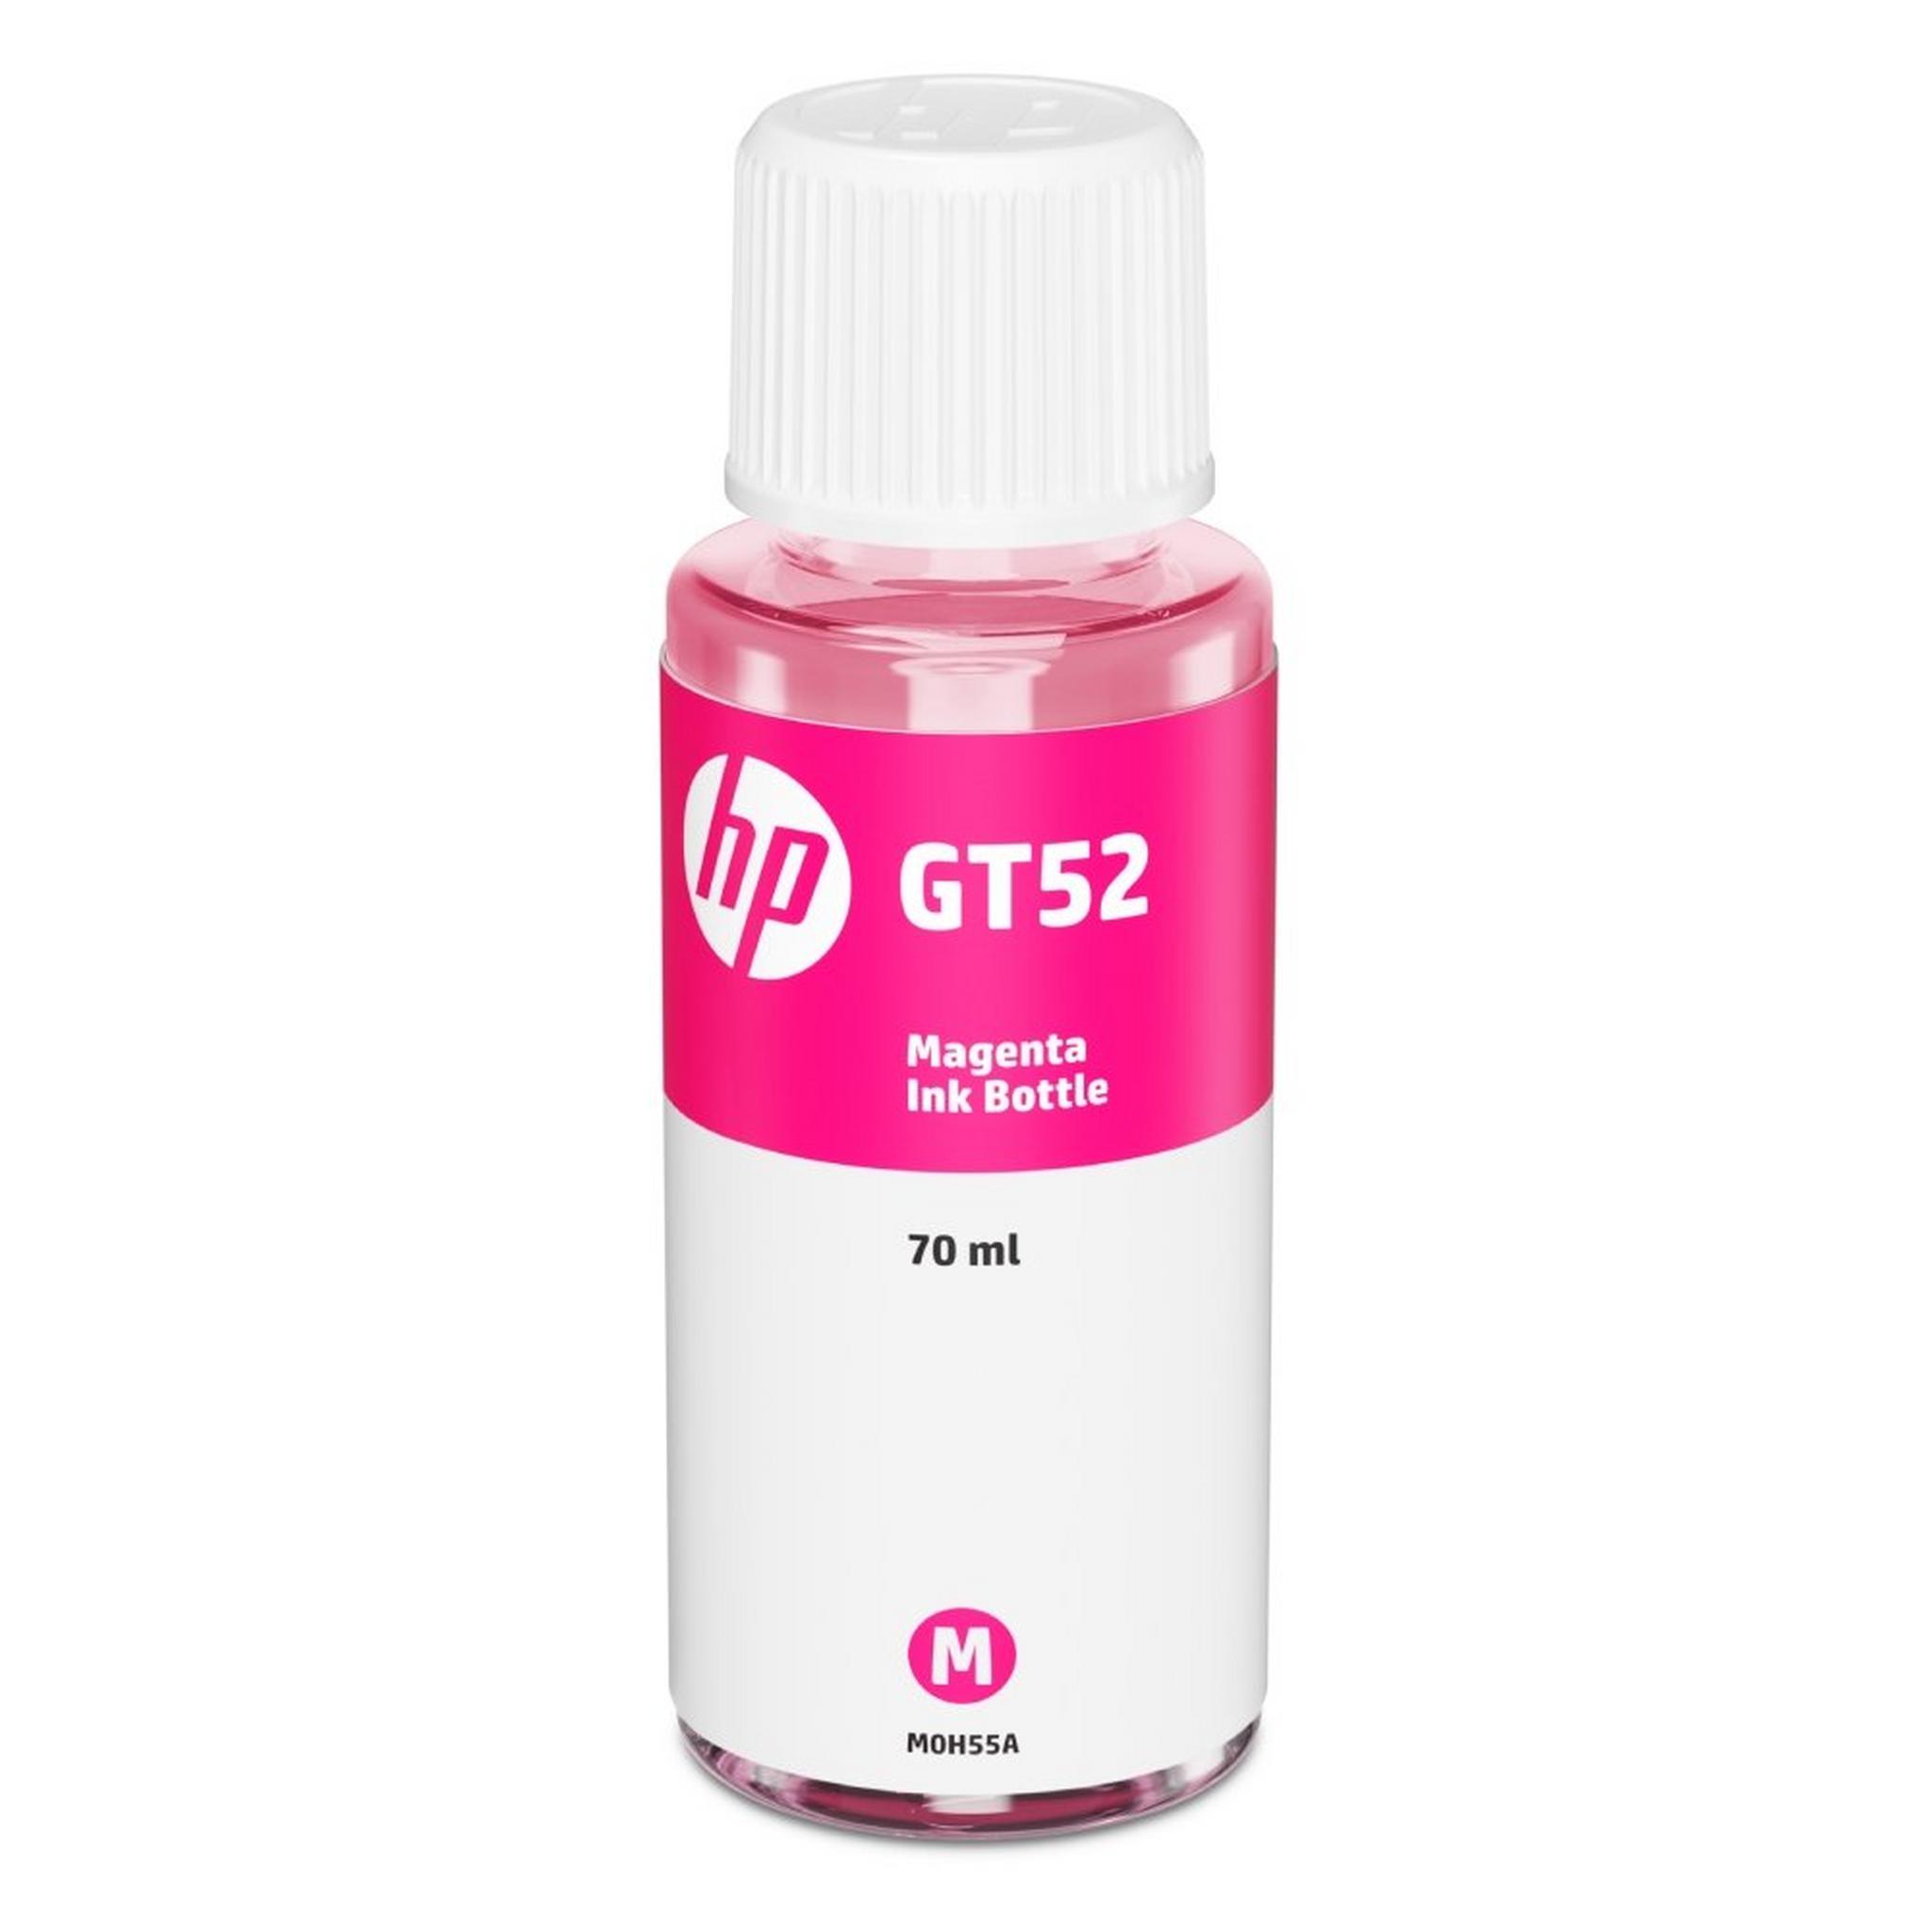 HP GT52 Magenta Ink